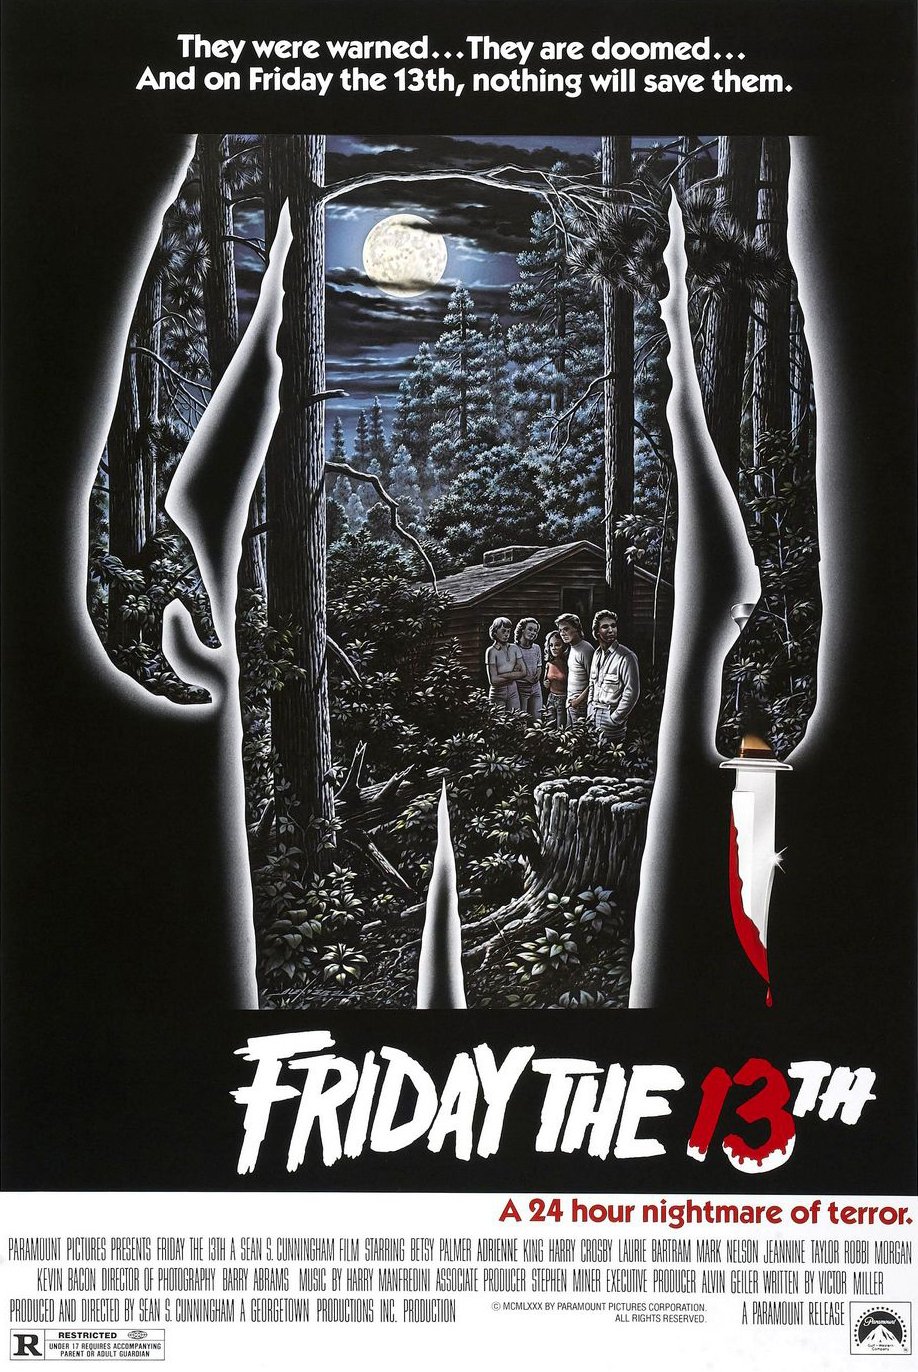 Nonton film Friday The 13th layarkaca21 indoxx1 ganool online streaming terbaru